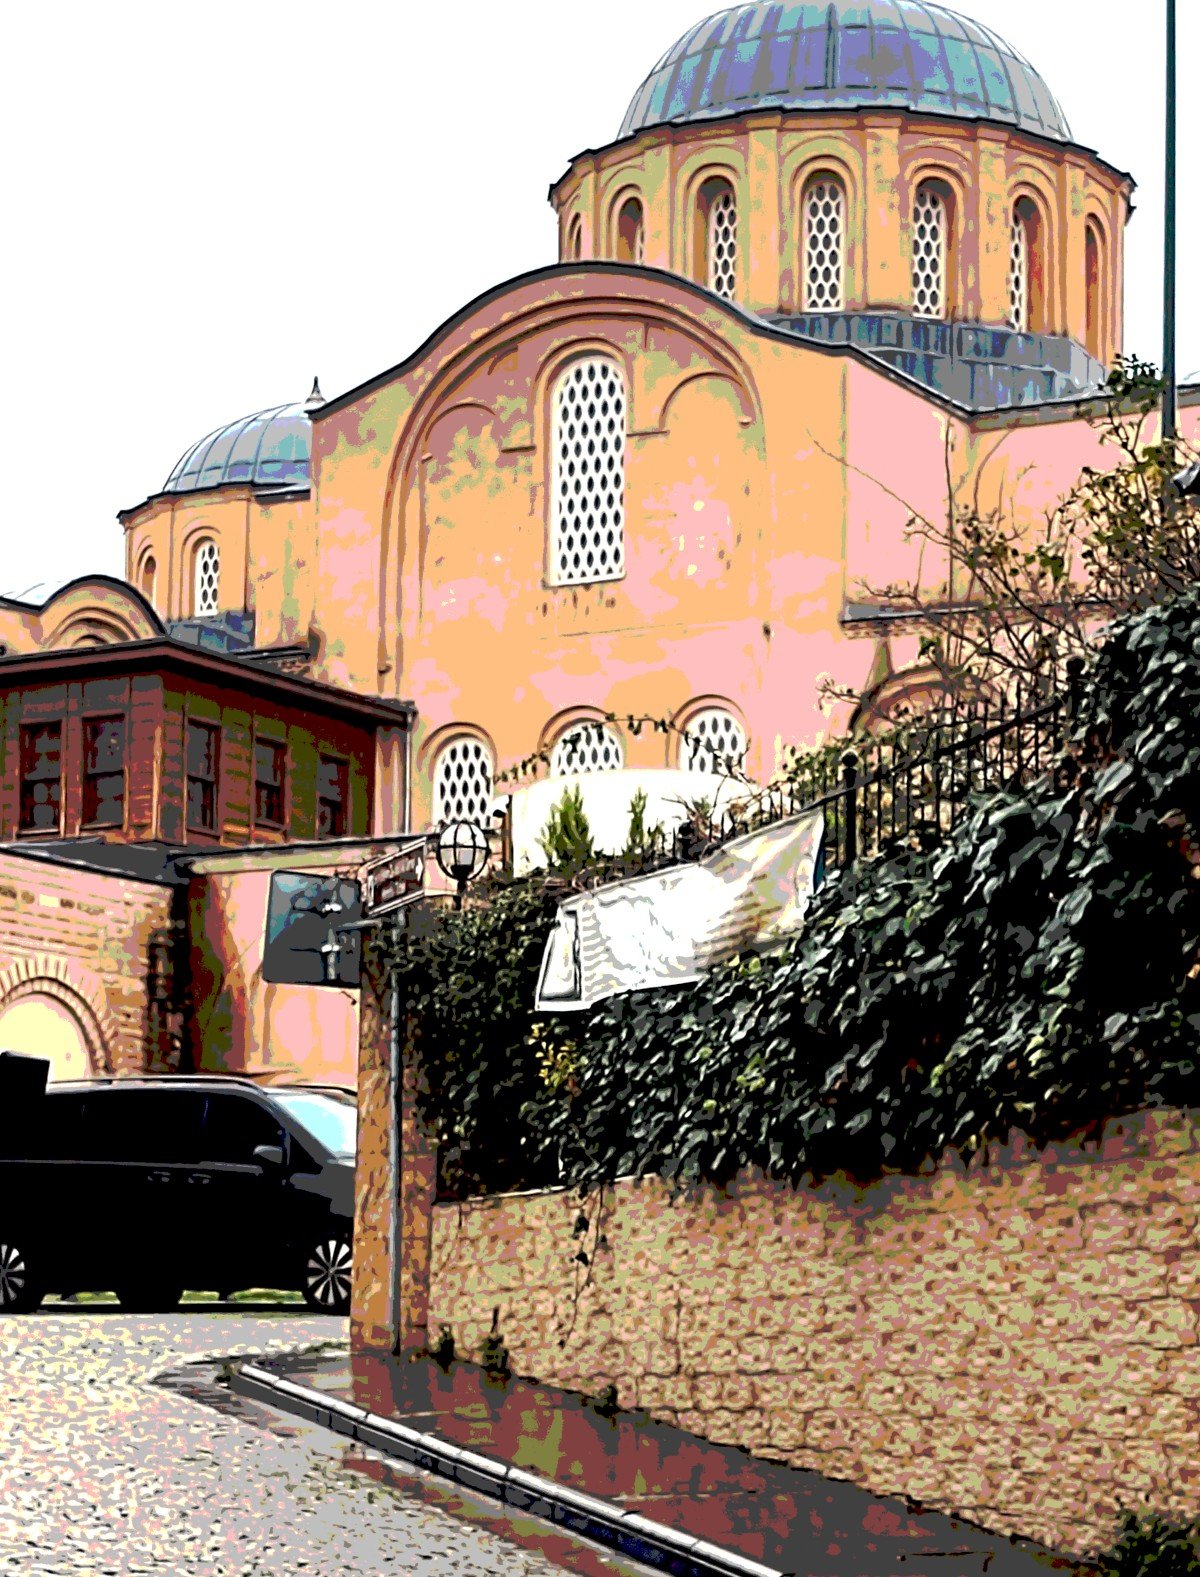 Pantocrater church, now Zeyrek mosque